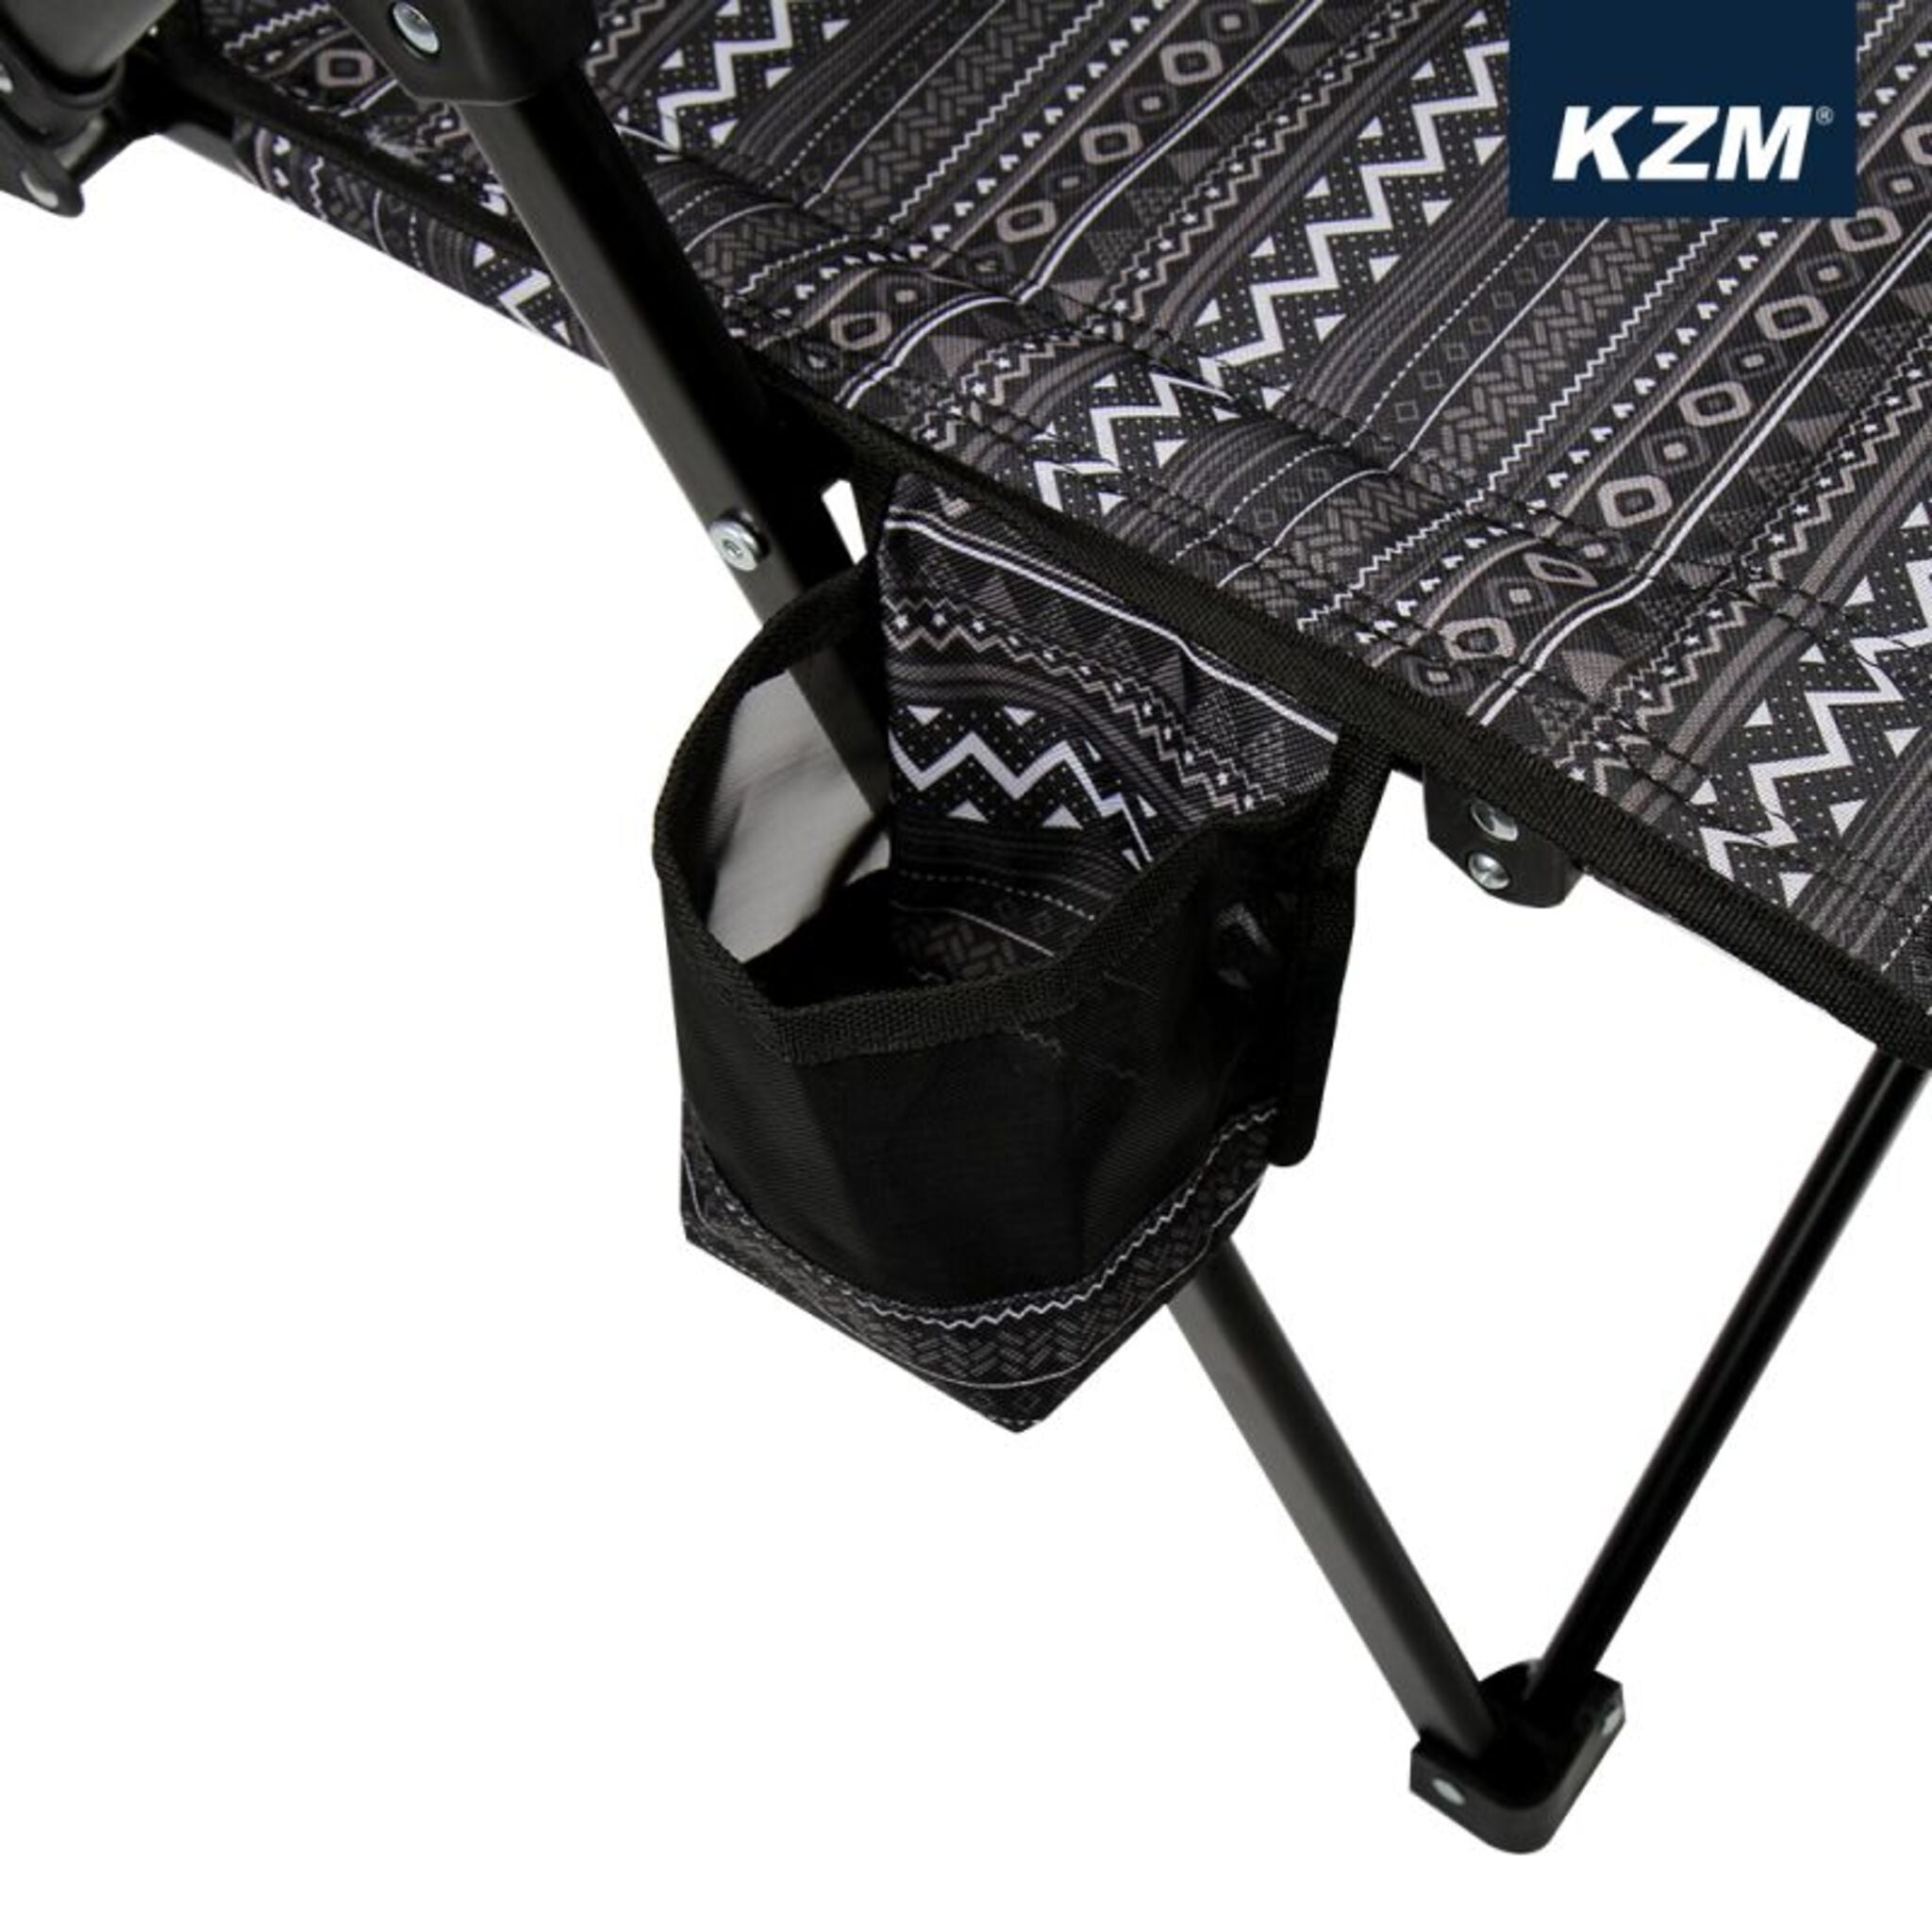 KAZMI KZM 彩繪民族風三段可調折疊椅 K20T1C002